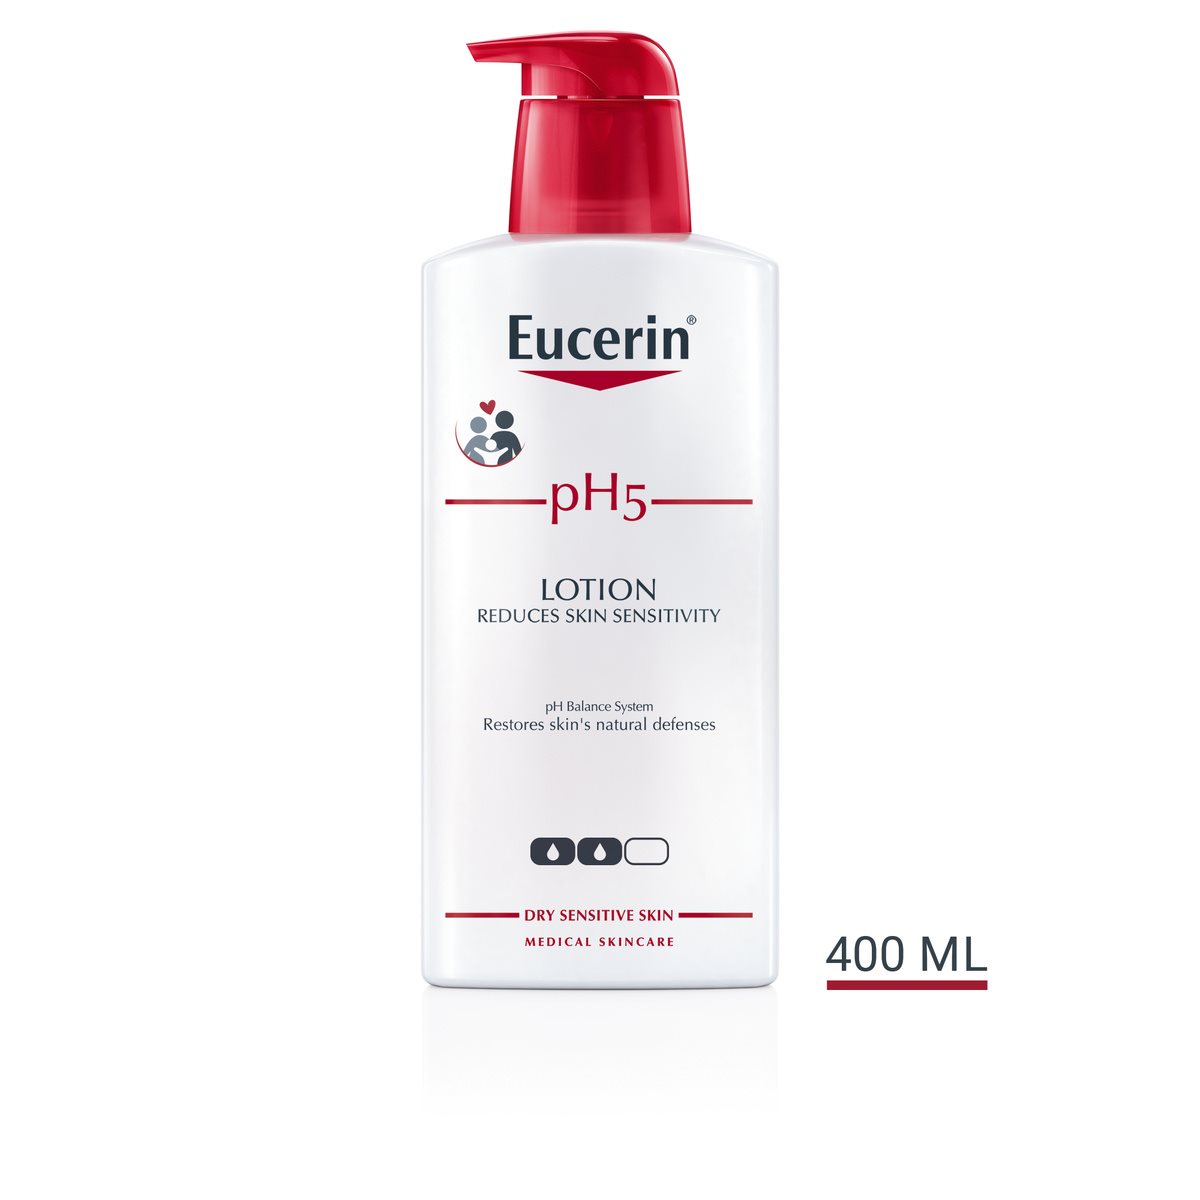 Lotion | Body lotion for dry, sensitive skin | Eucerin